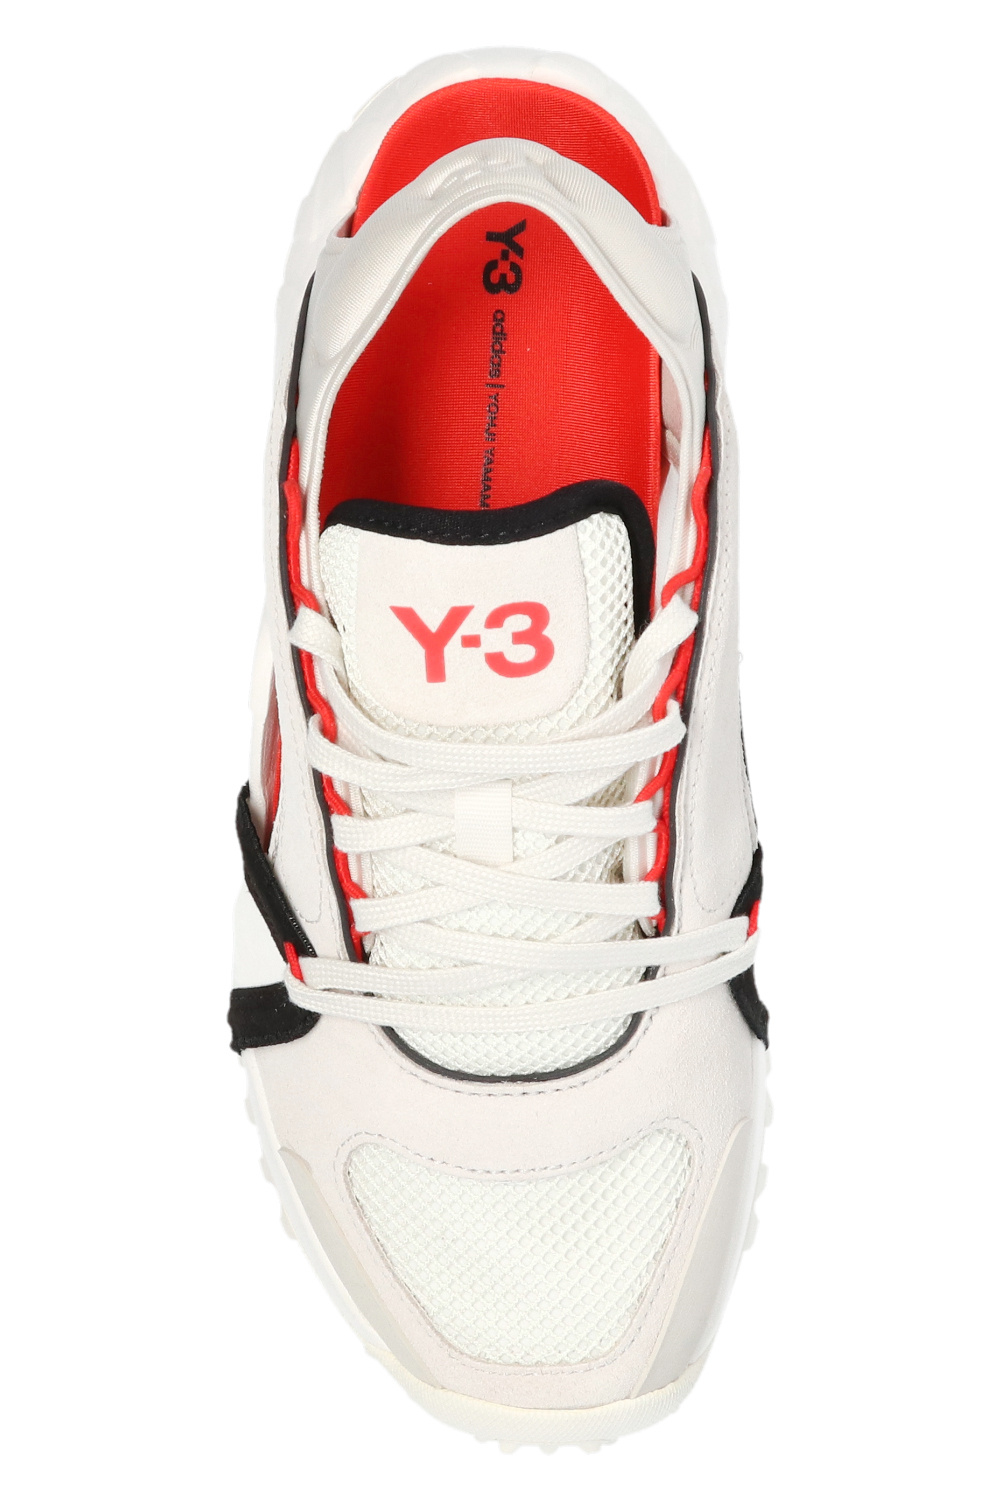 Notoma' sandals Y - 3 Yohji Yamamoto - adidas hamburg discontinued 